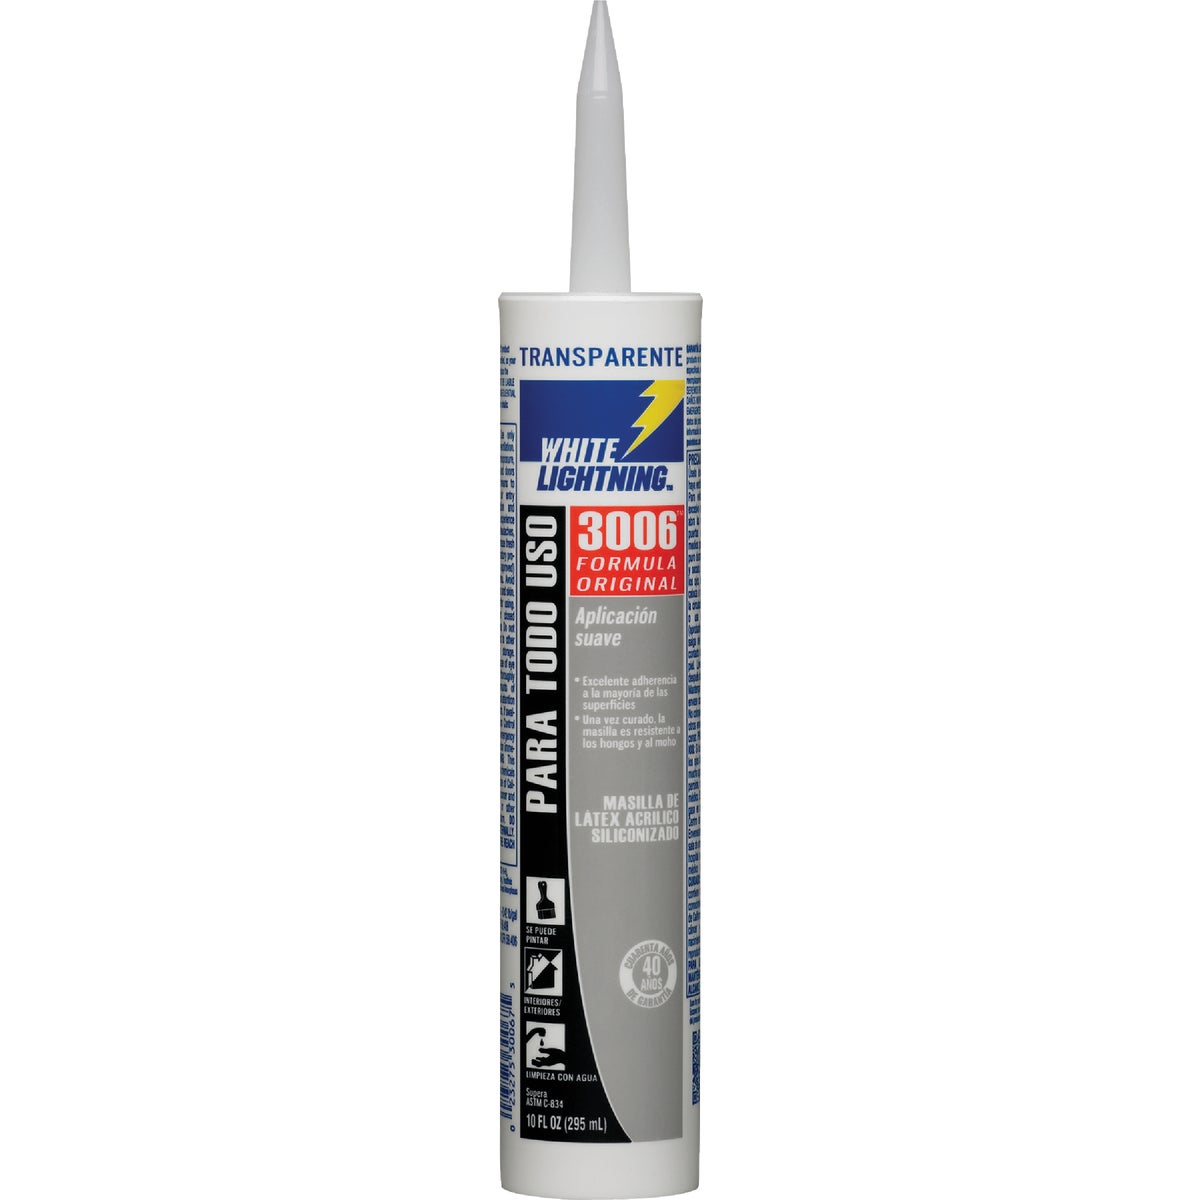 Item 787710, White Lightning 3006 Original Formula is a siliconized acrylic latex all-